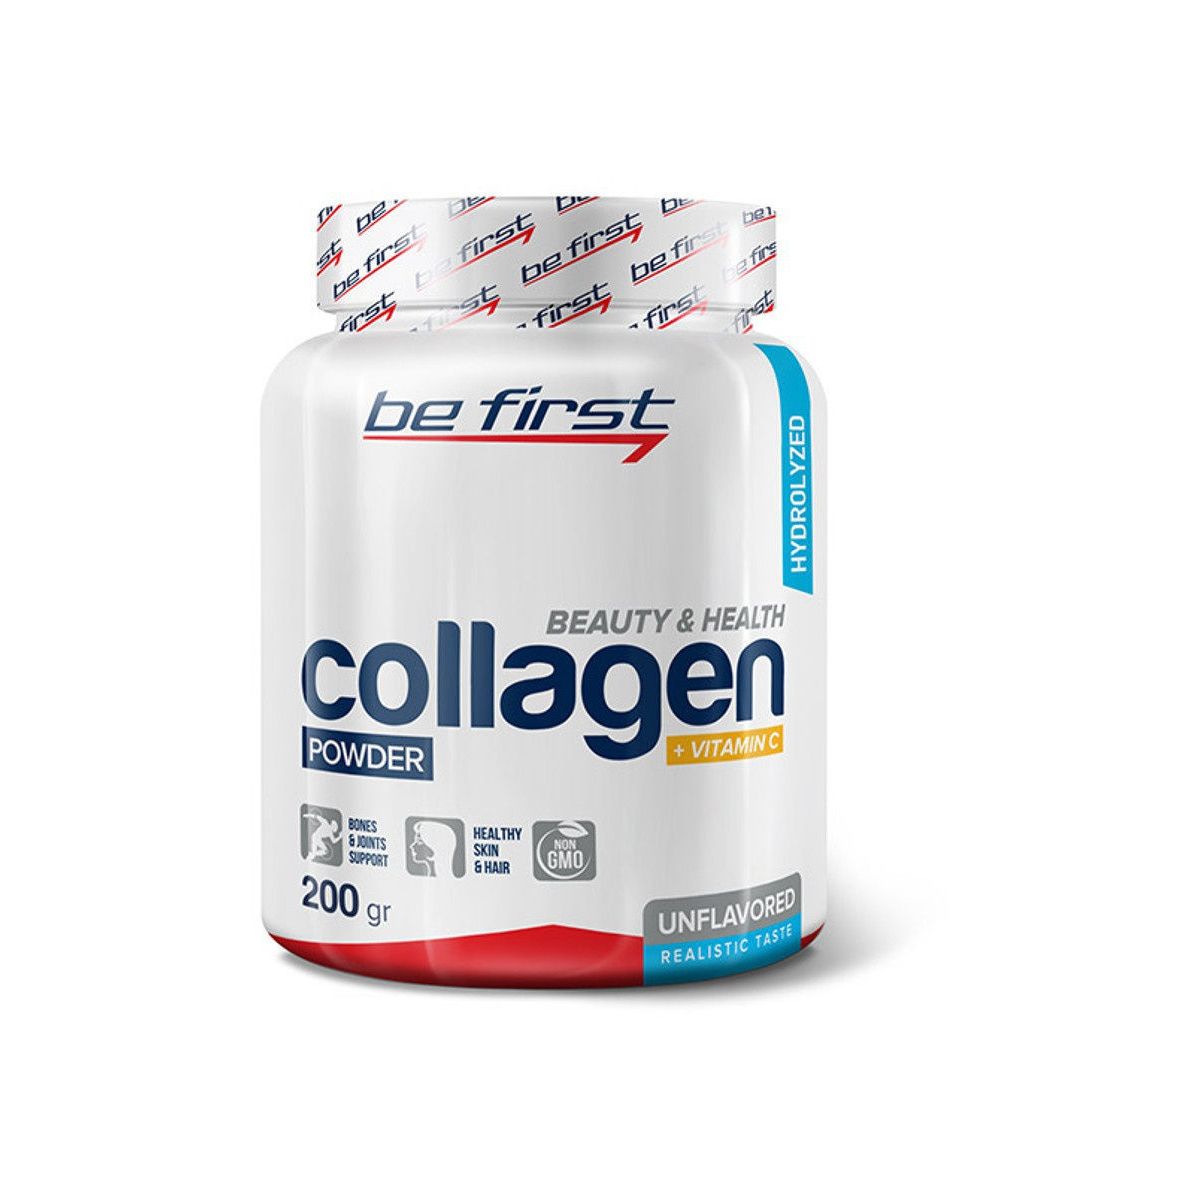 Коллаген столички. Коллаген би Ферст. Be first Collagen Powder + c 200 gr. Collagen Powder 200 гр 2sn. Коллаген be first Collagen + Vitamin c.